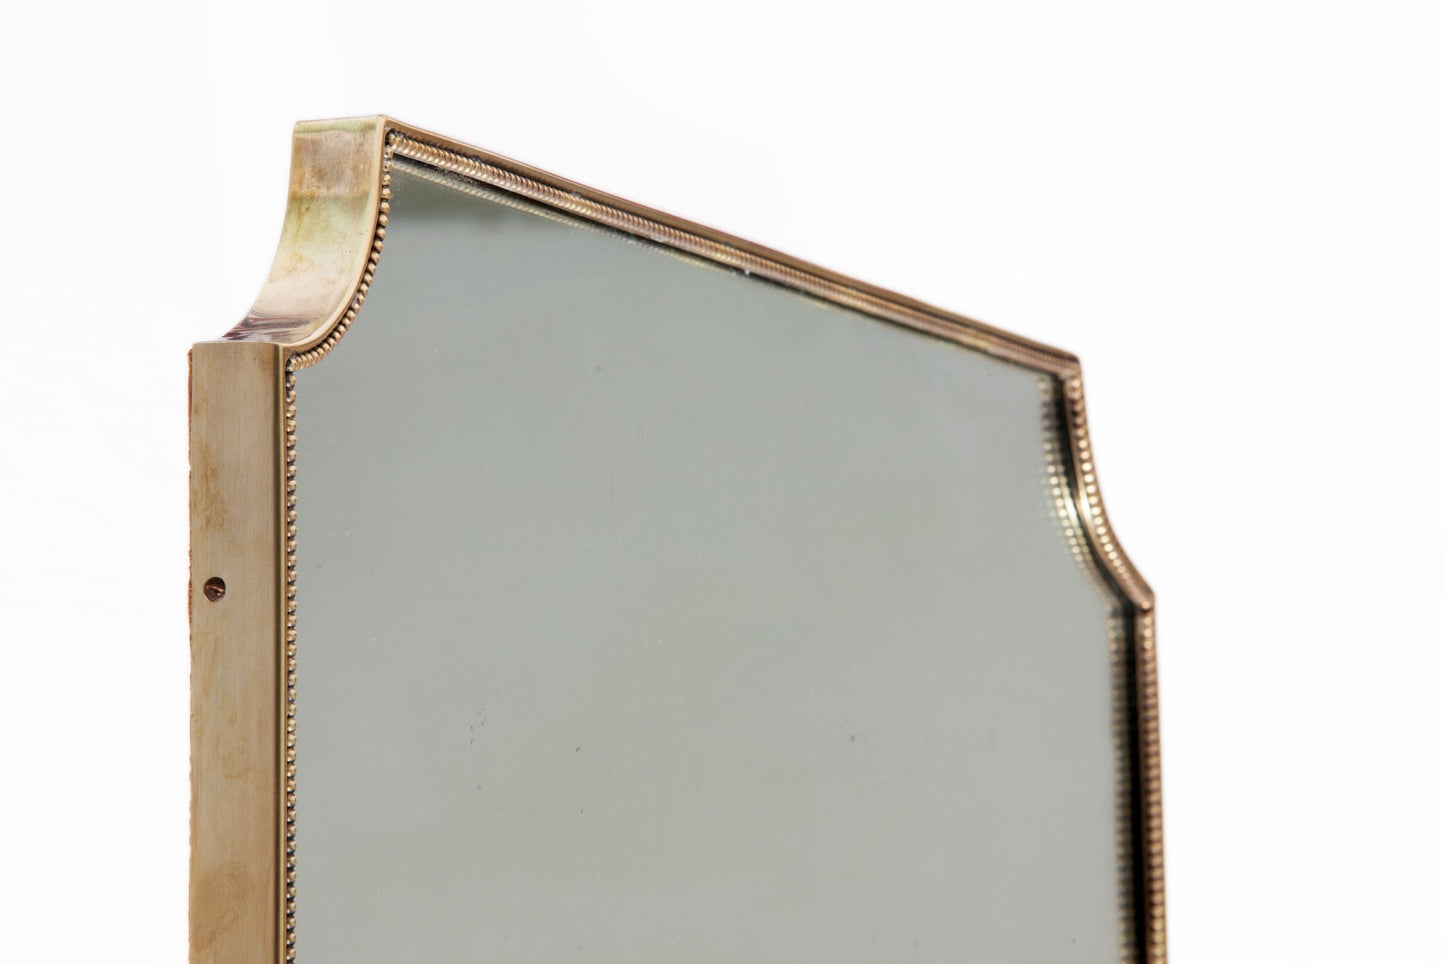 1950s brass mirror with cut corners